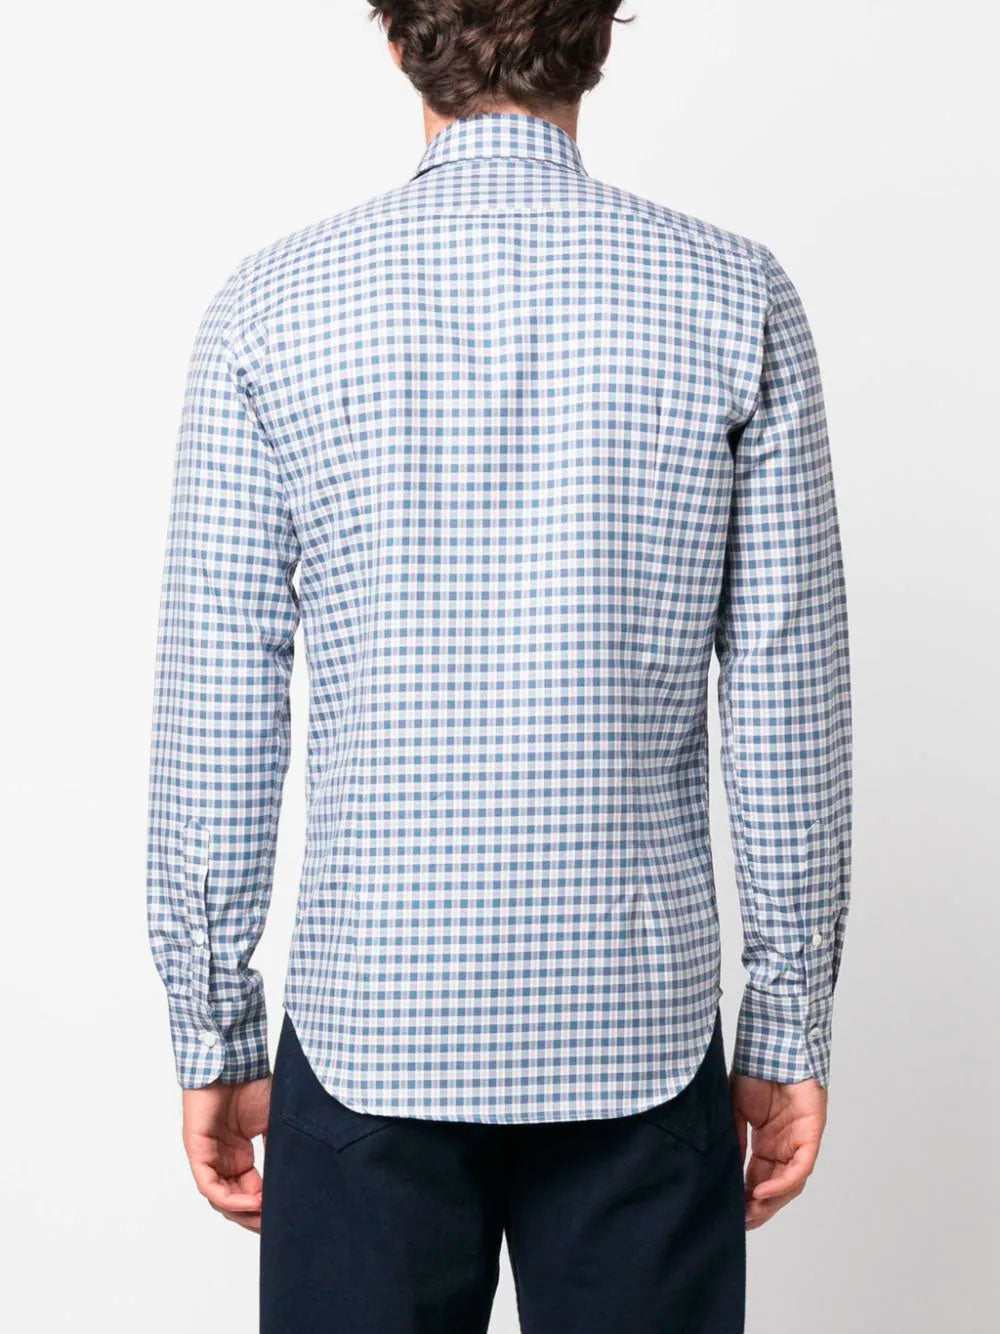 Plaid-check button-up shirt